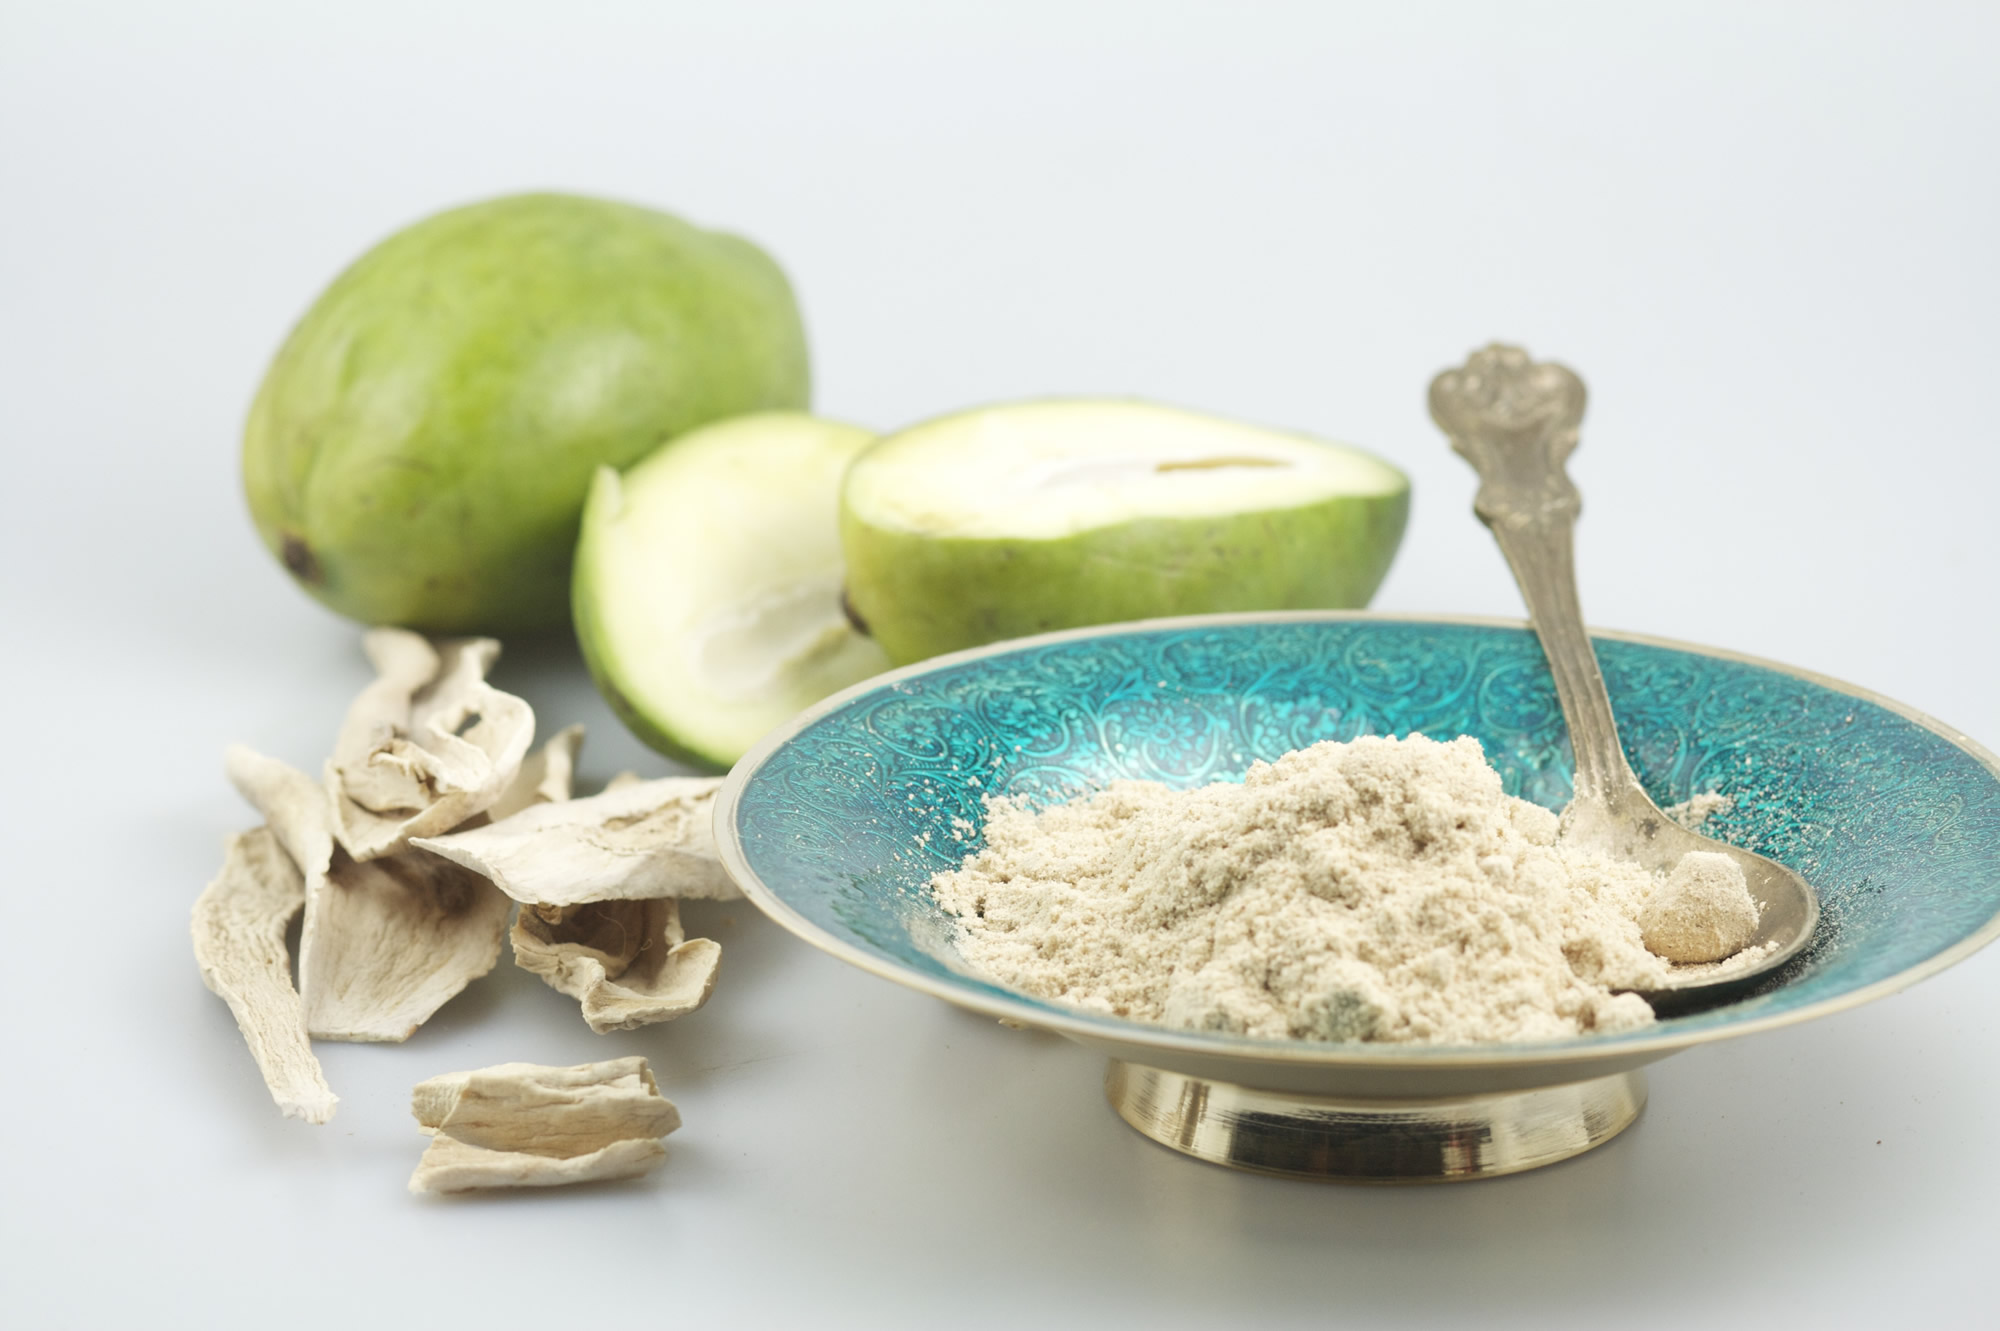 amchur powder - Health benefits of mango or amchur powder